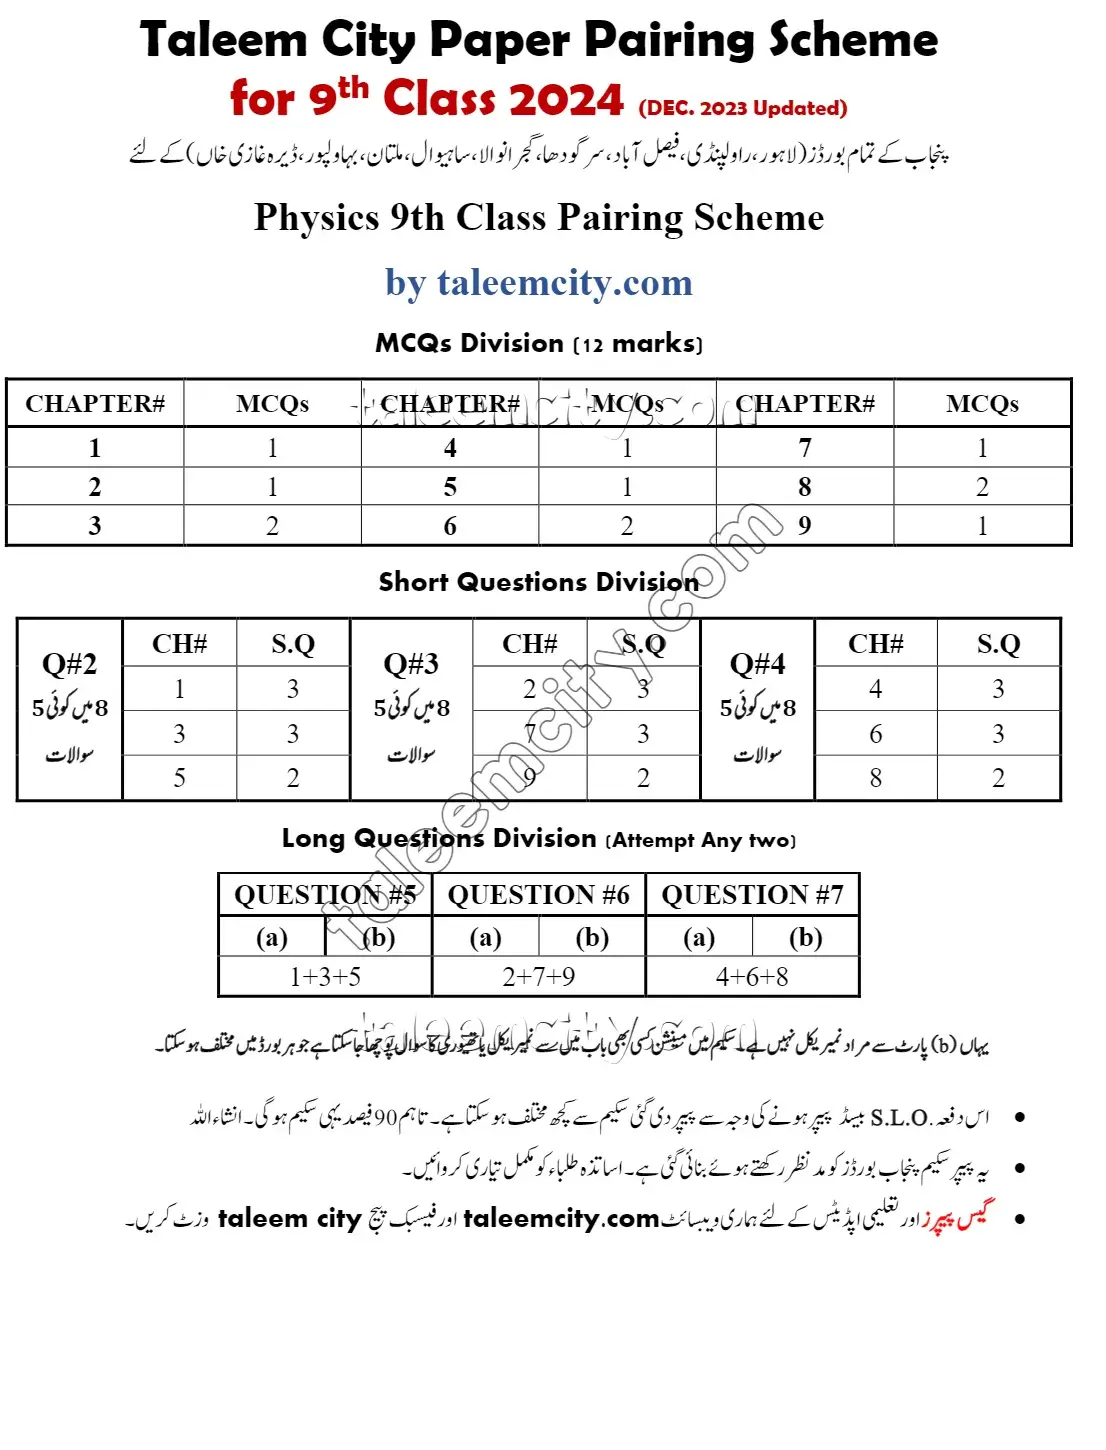 9th Class Physics Pairing Scheme 2024